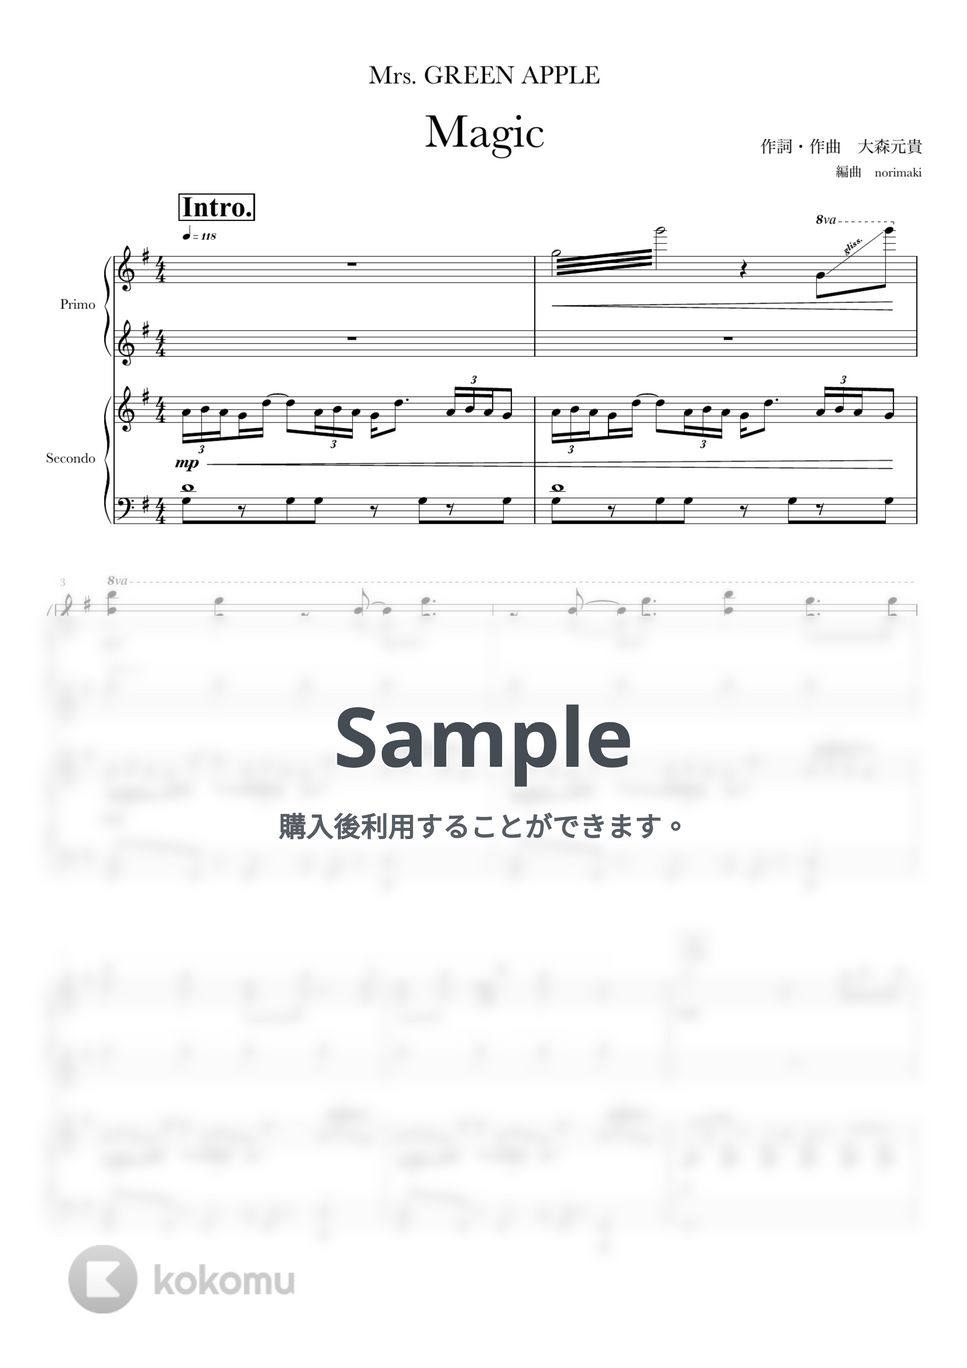 Mrs.GREEN APPLE - Magic (ピアノ連弾) by norimaki